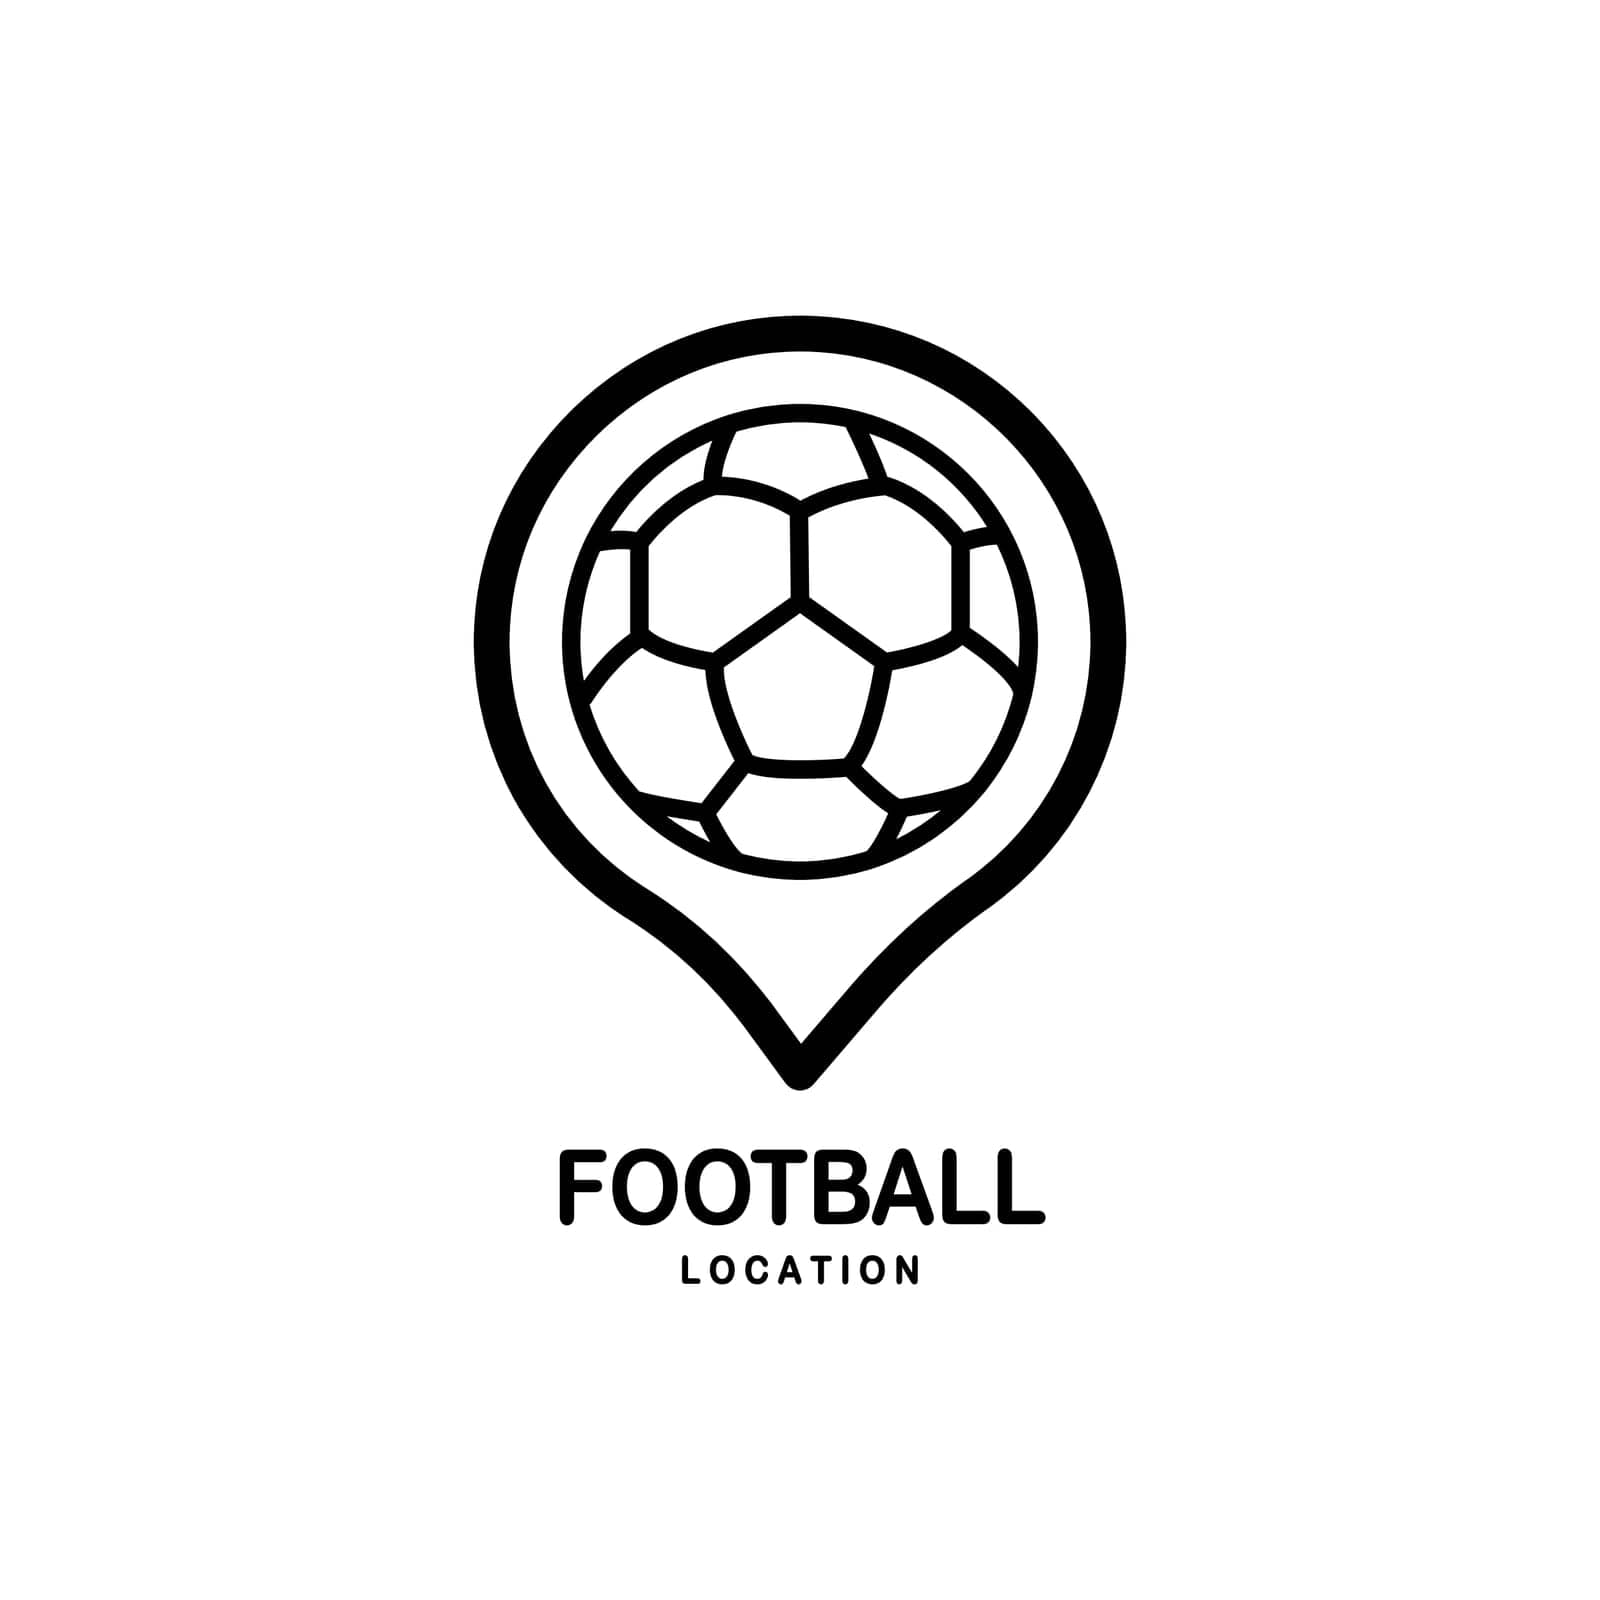 Football match location icon. stadium pin locator. simple illustration outline style sport symbol.